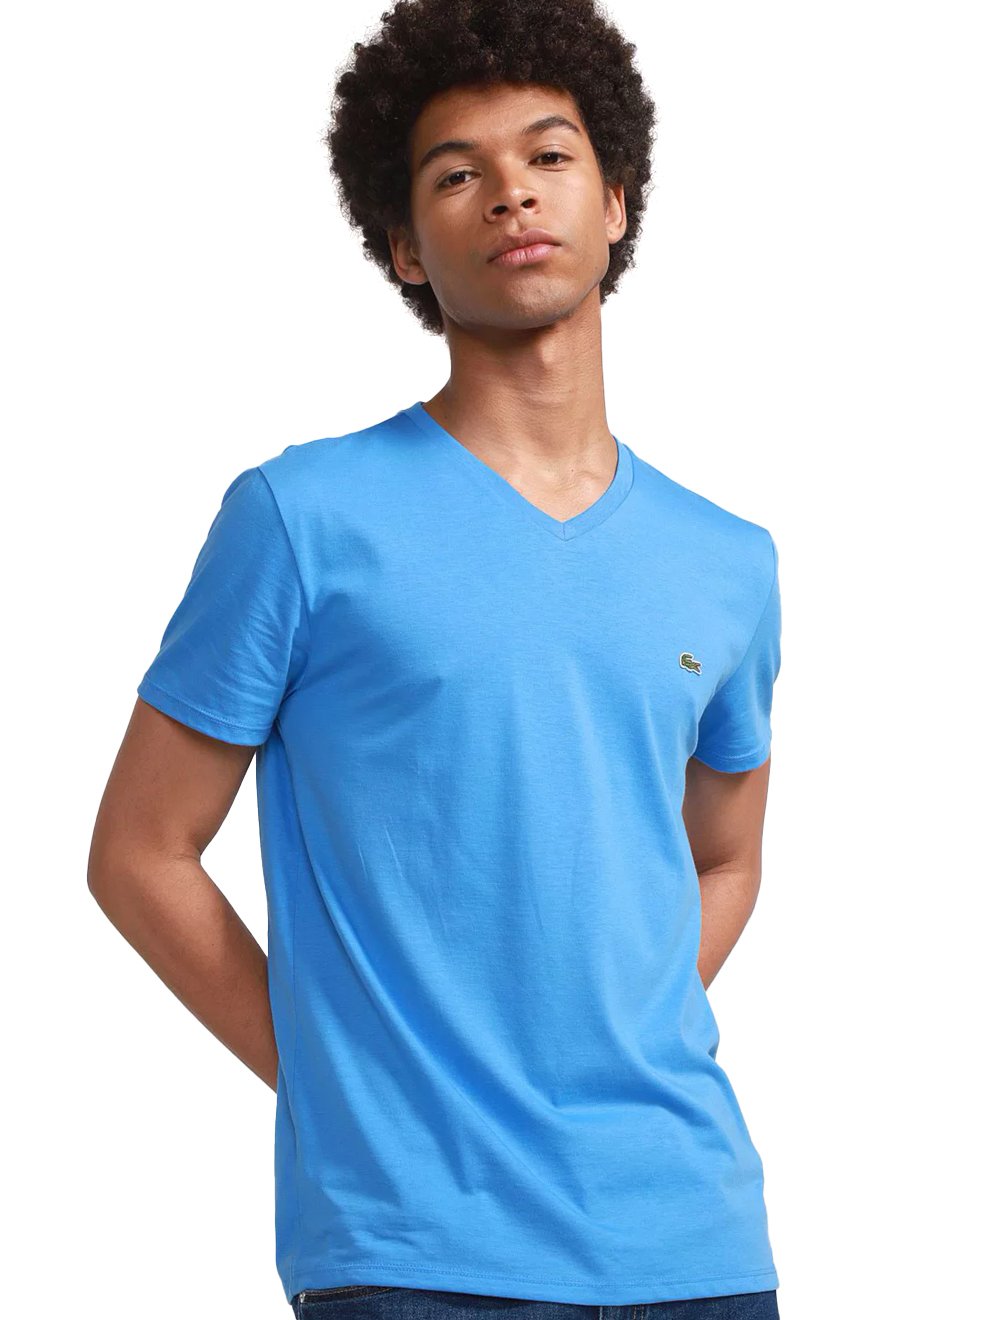 Camiseta Lacoste Masculina Sport Ultra-Dry V-Neck Azul Claro